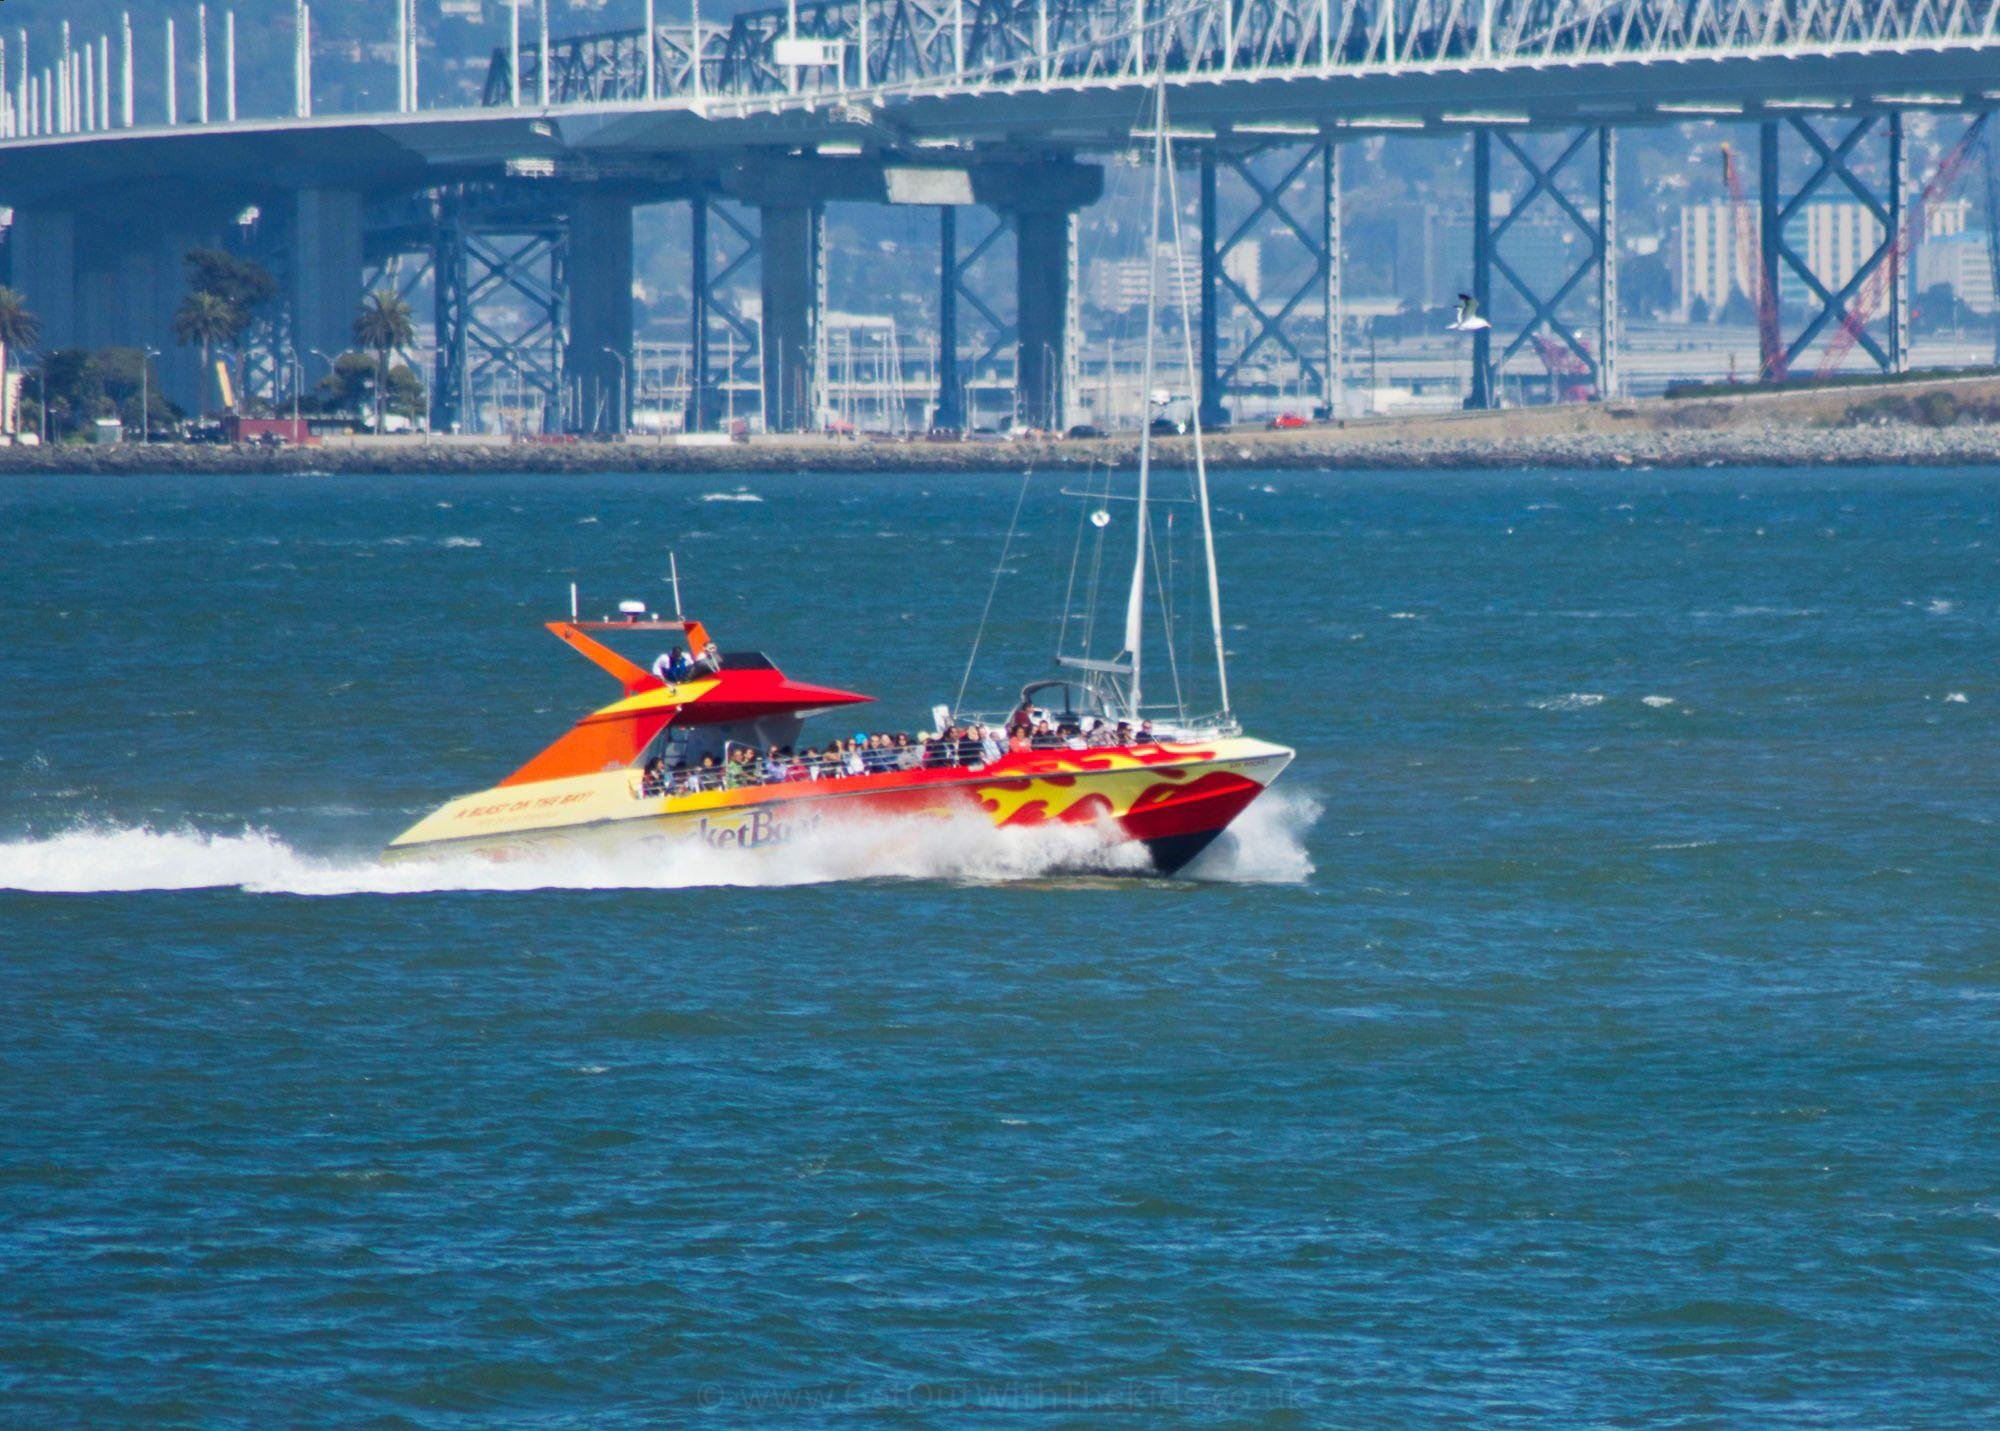 San Francisco Rocket Boat